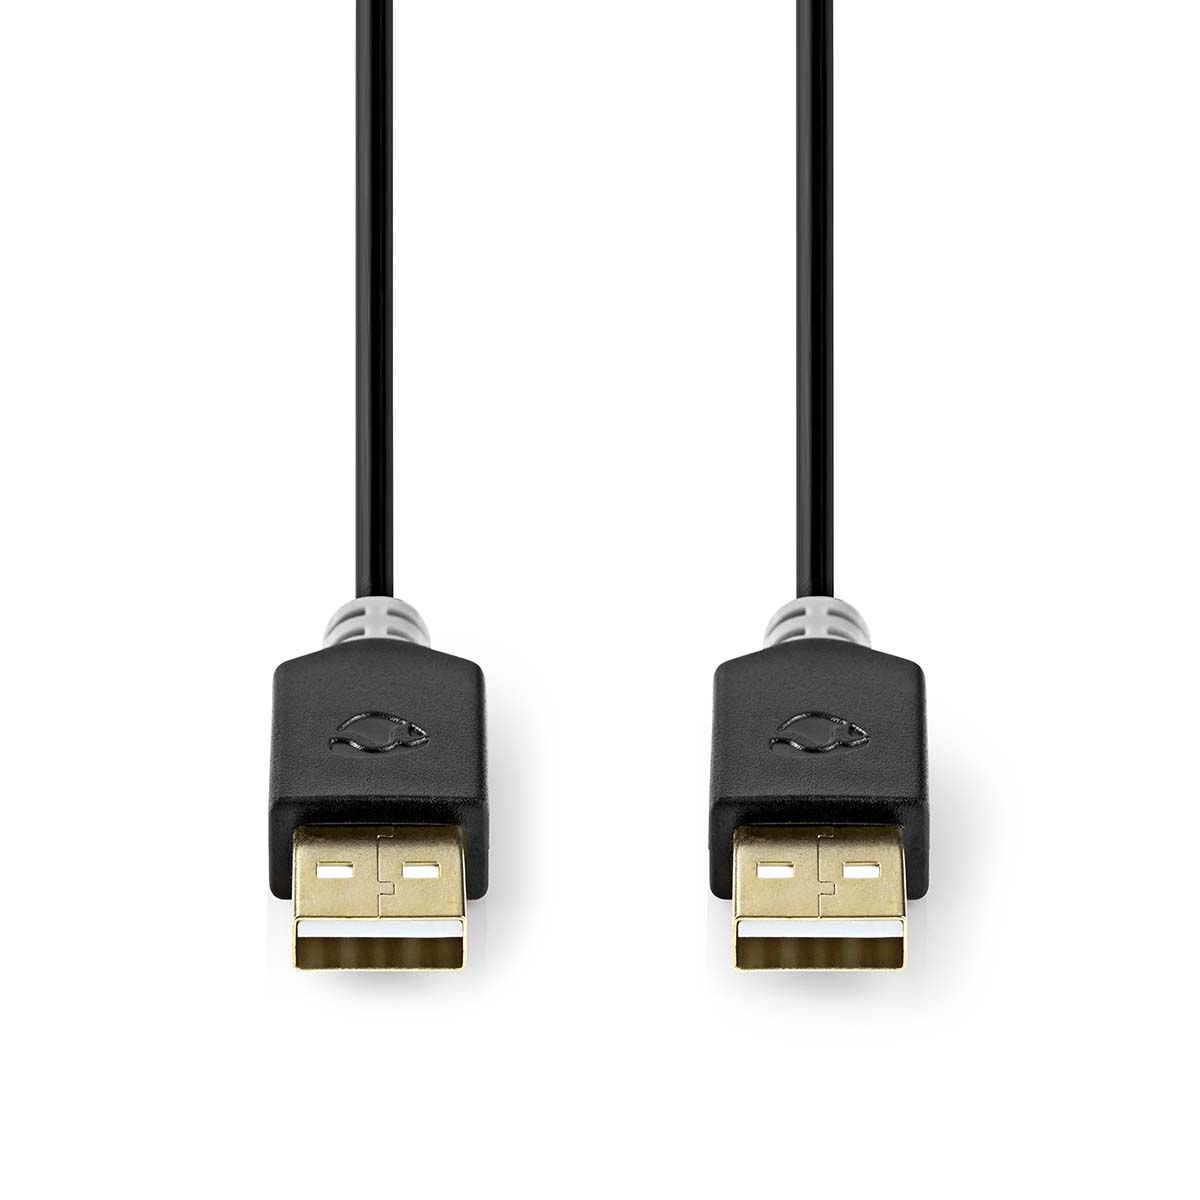 NEDIS CCBW60000AT20, USB-Kabel, 2,00 m